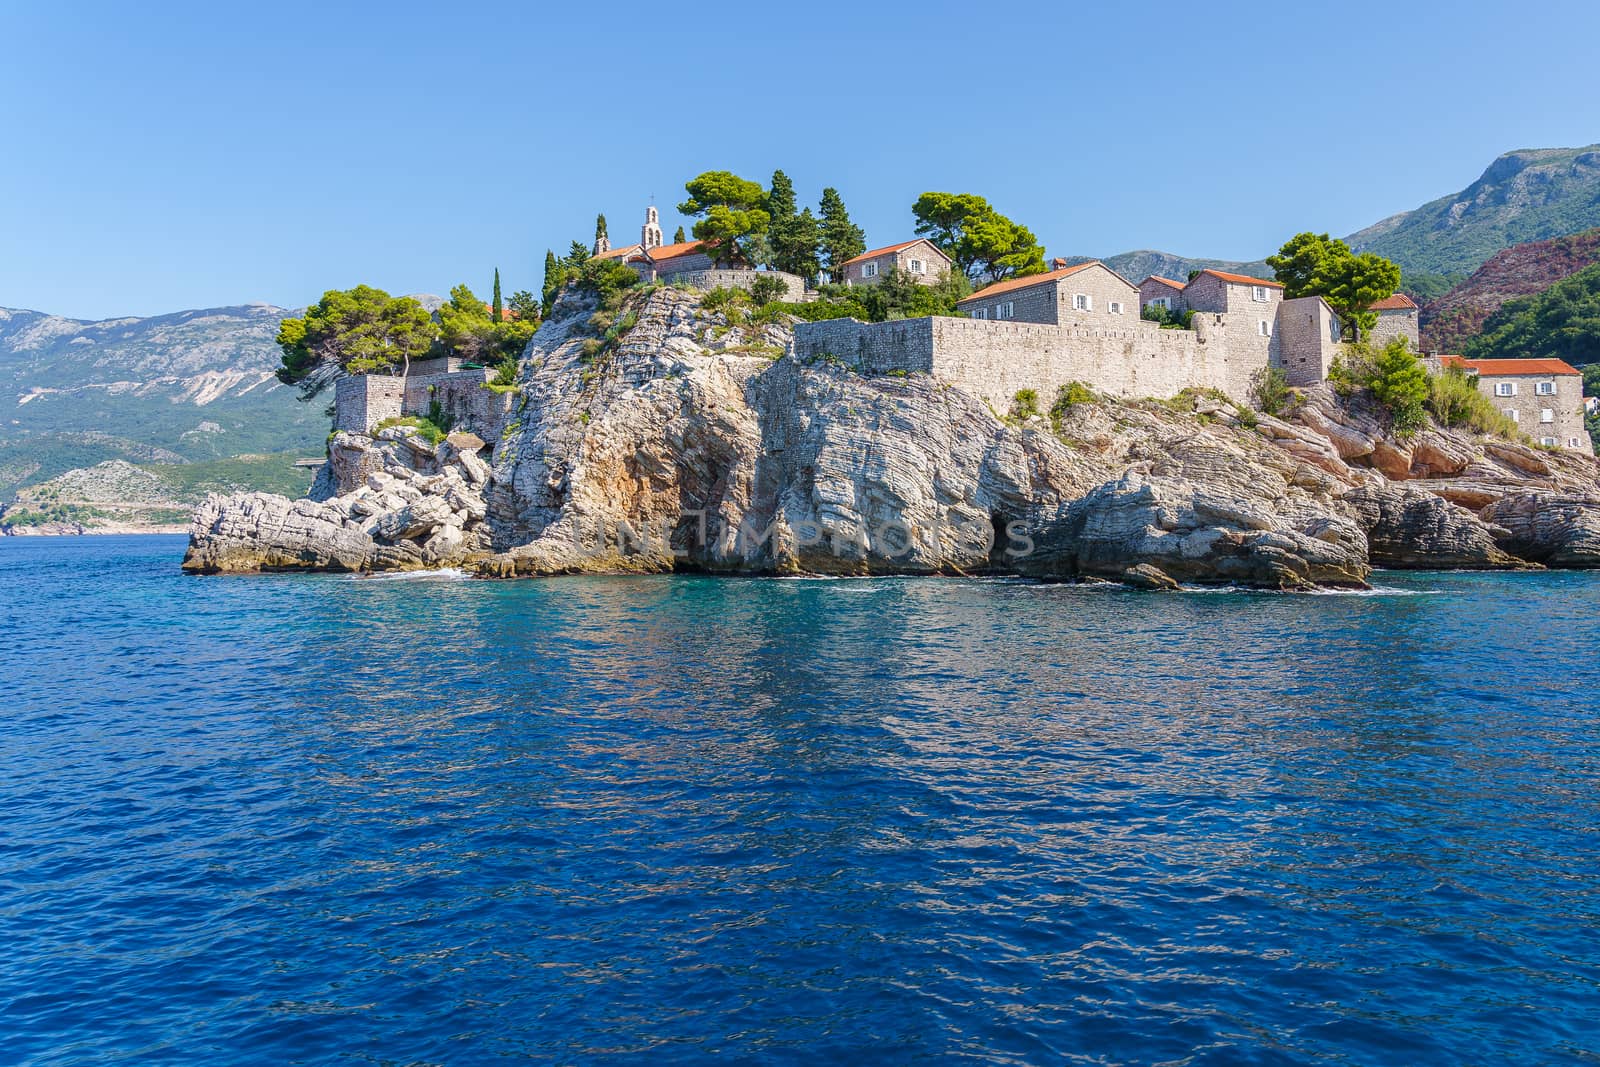 St. Stephen's island off the coast of Montenegro, resort